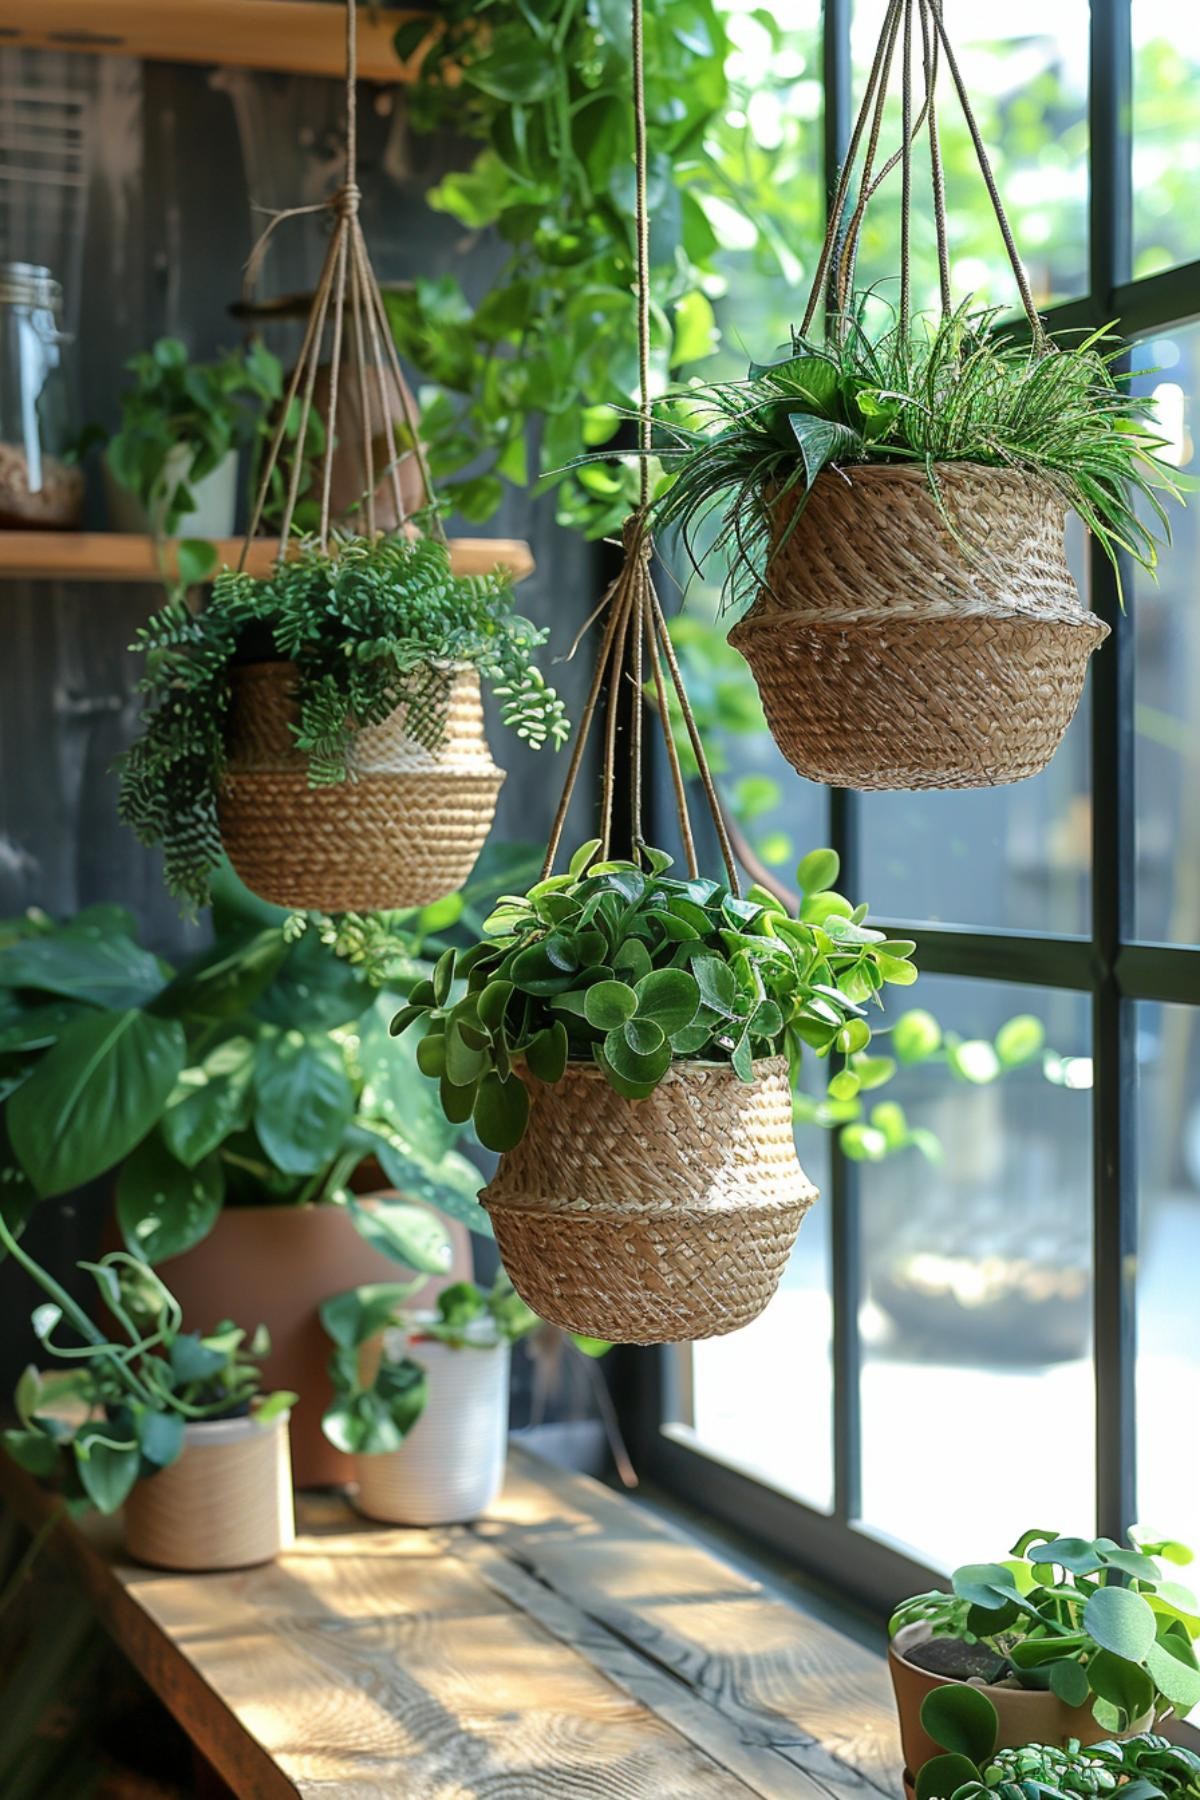 Baskets of Greens